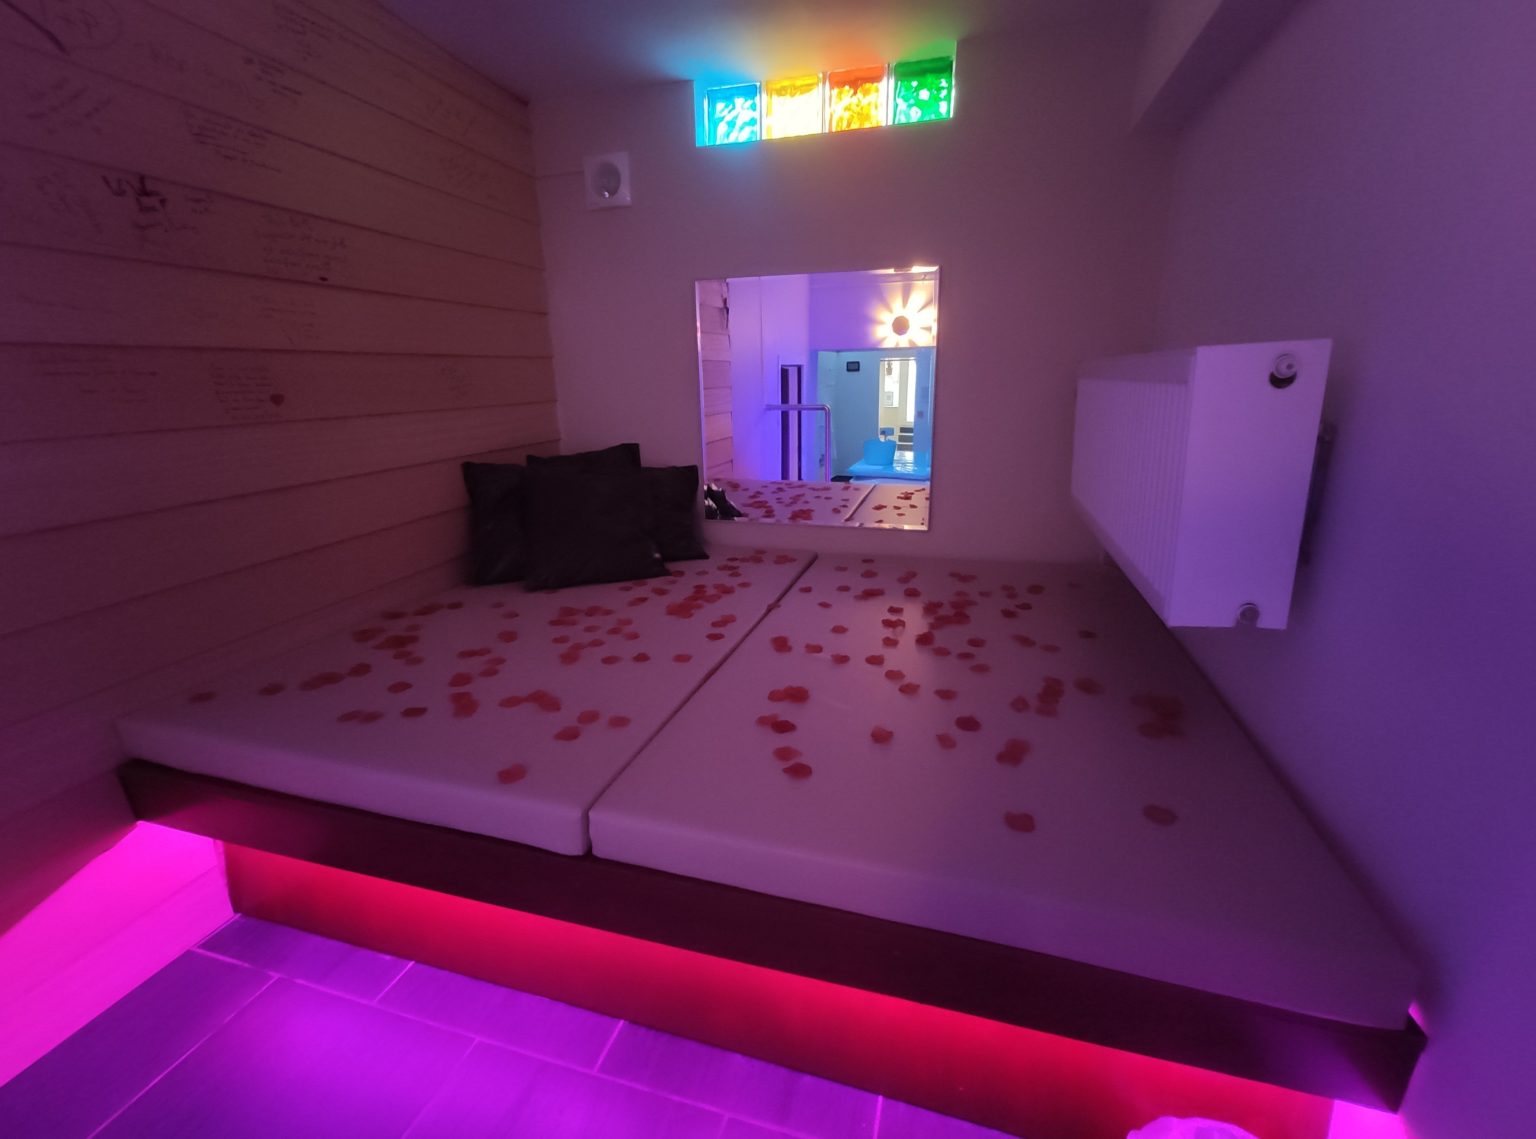 Lounge area met rozenblaadjes